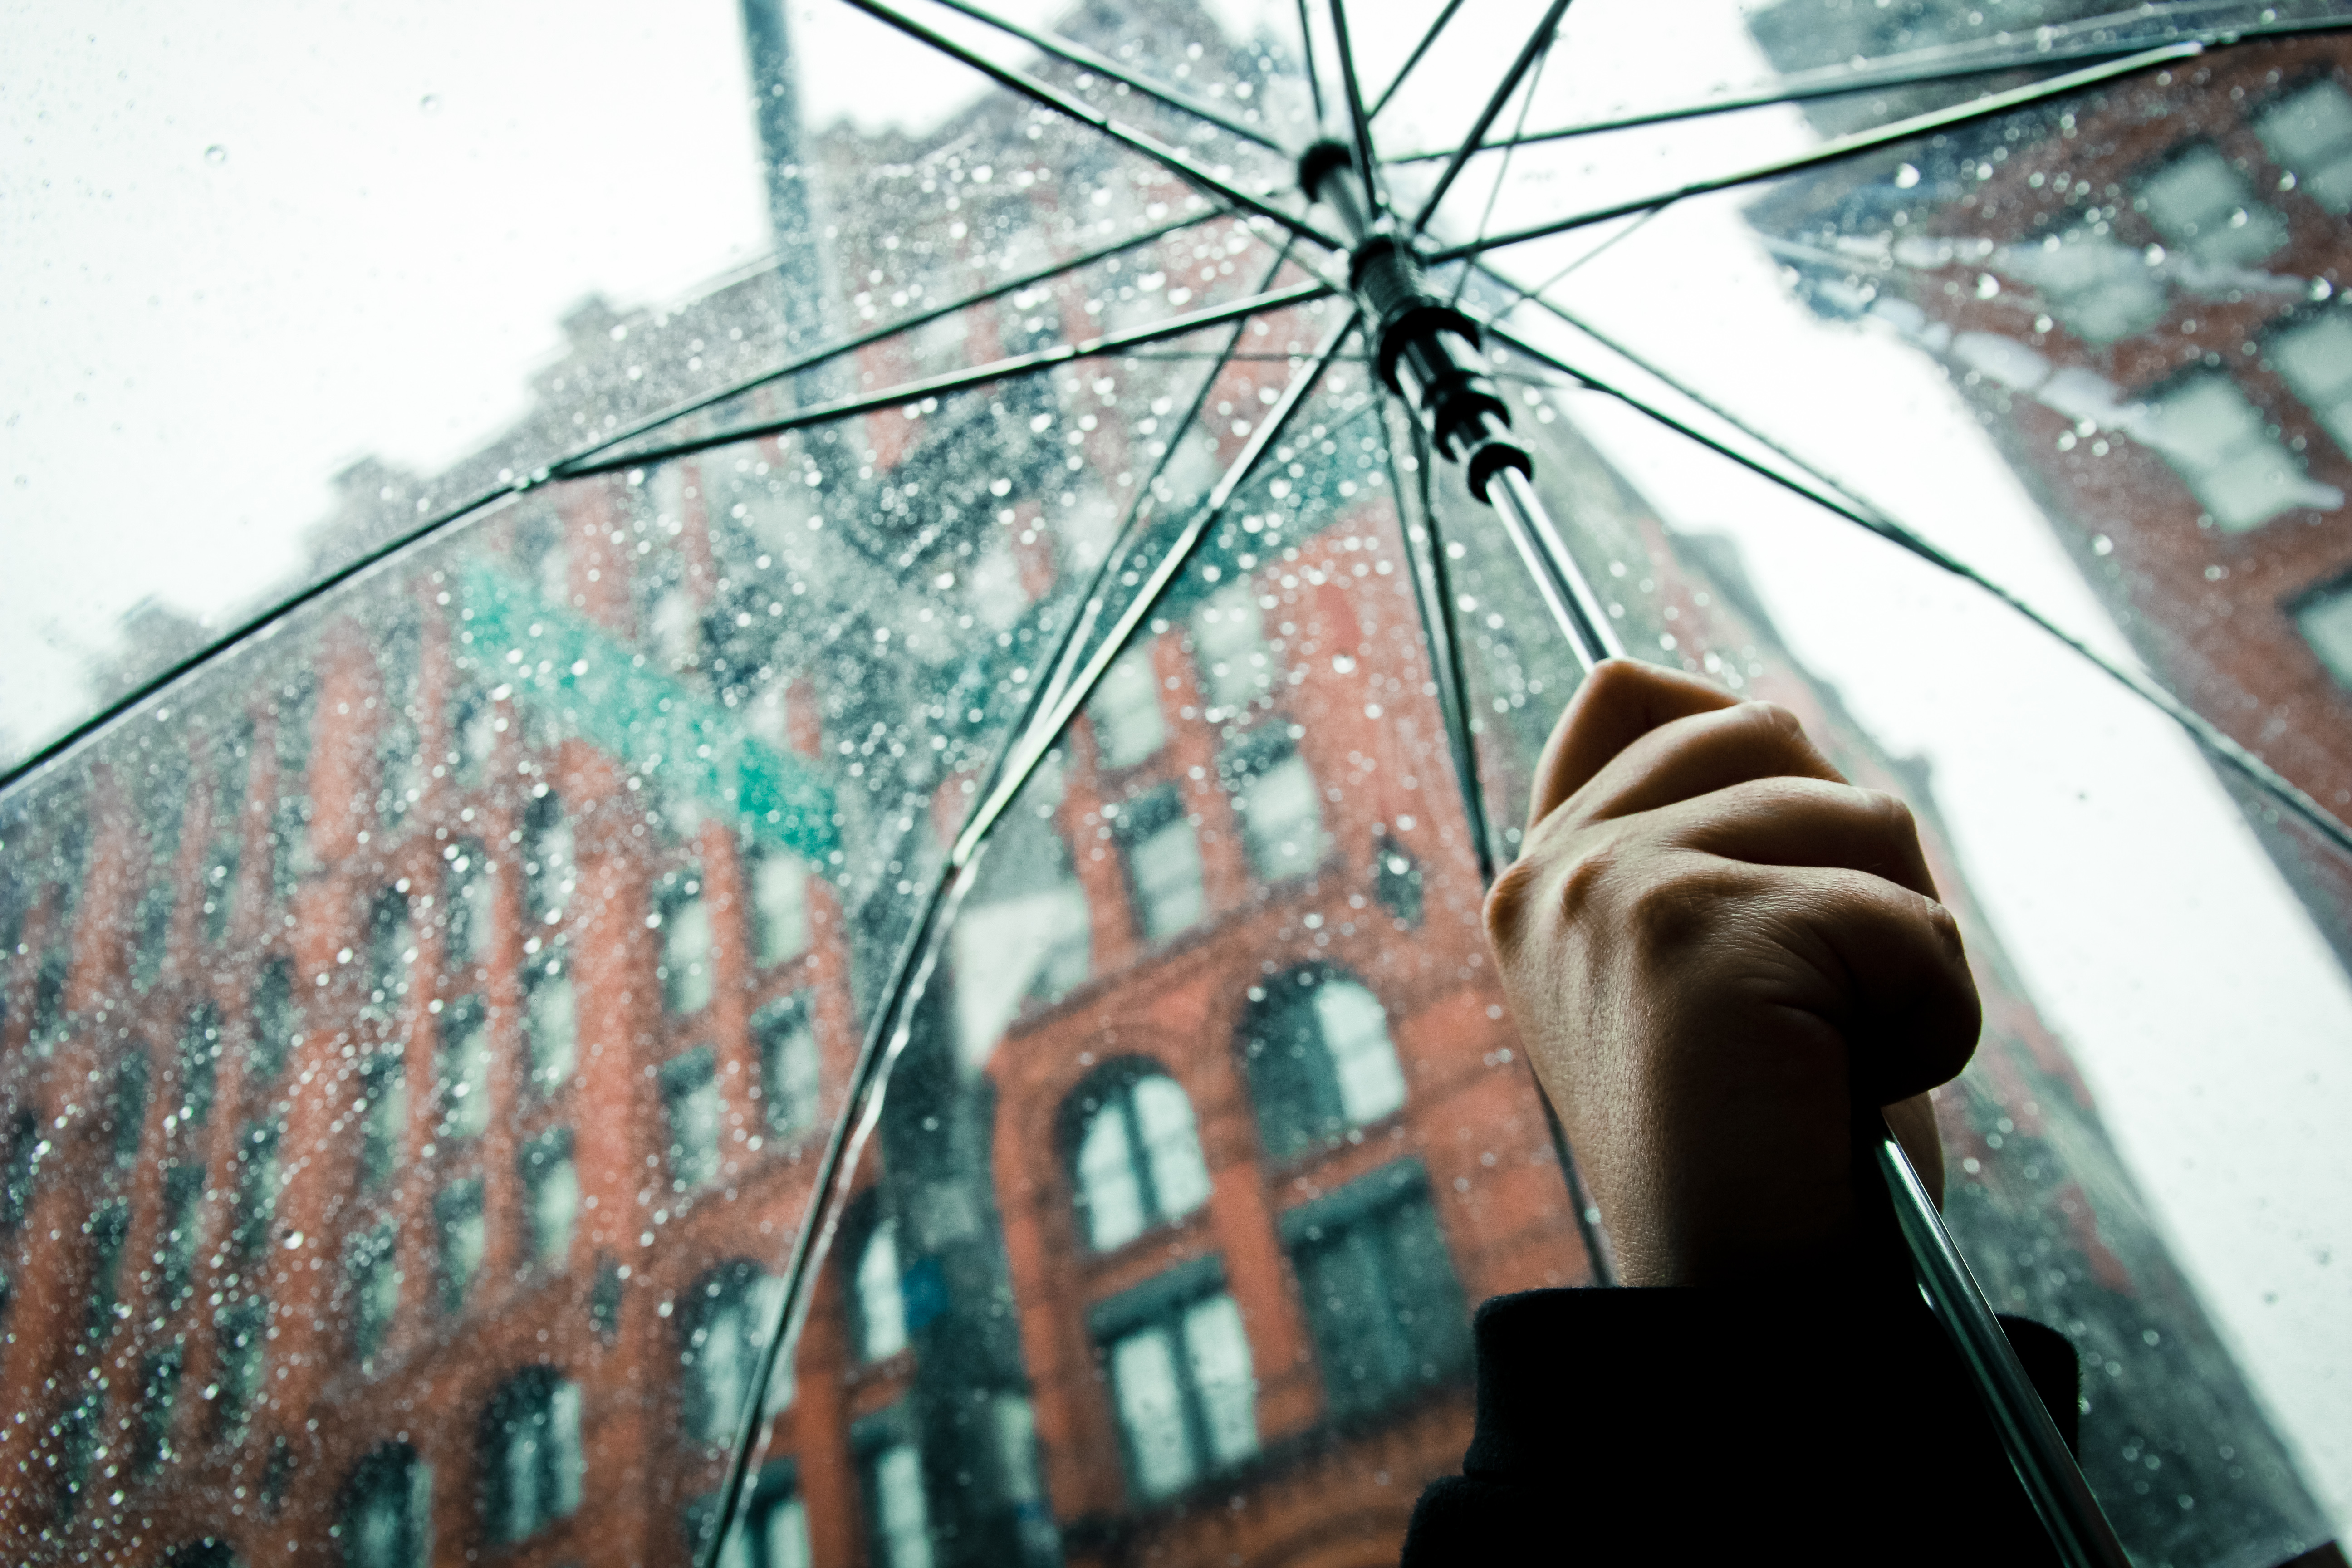 New York facets - Umbrella cover [Explored]